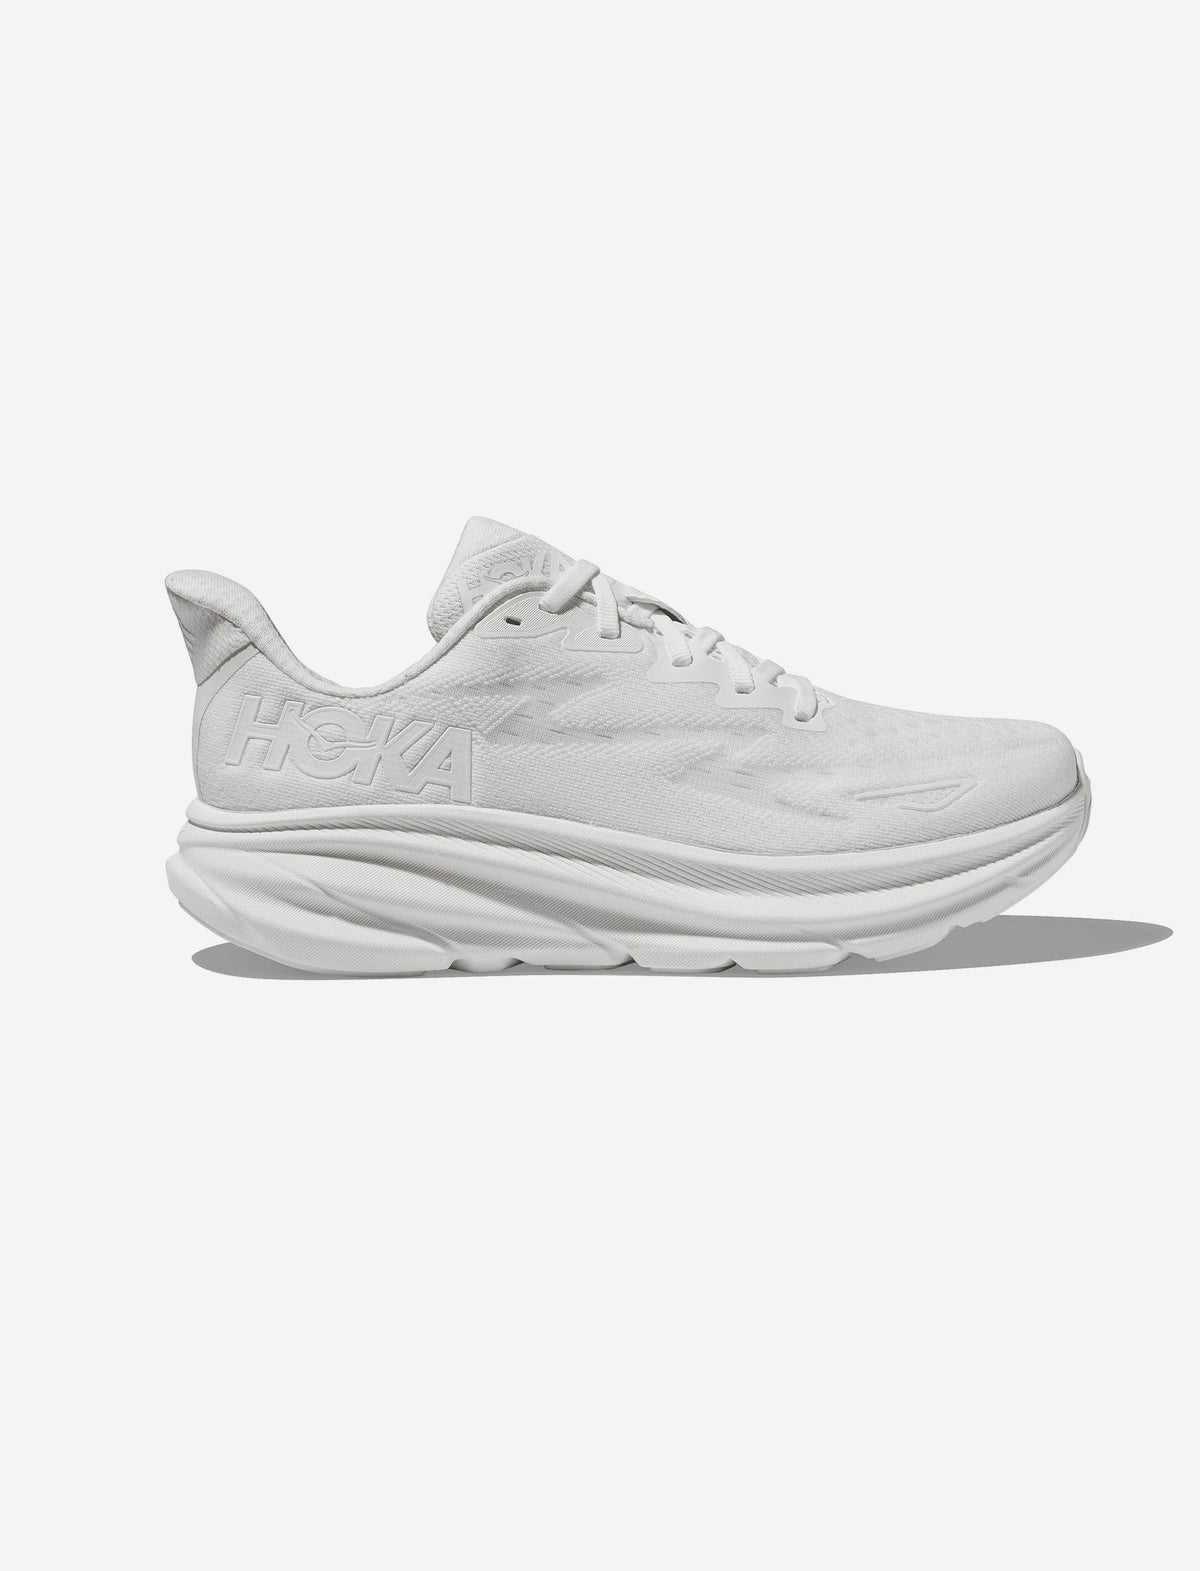 Hoka Clifton 9 - נעלי ספורט גברים הוקה קליפטון 9 בצבע לבן/לבן-Hoka-41-נאקו